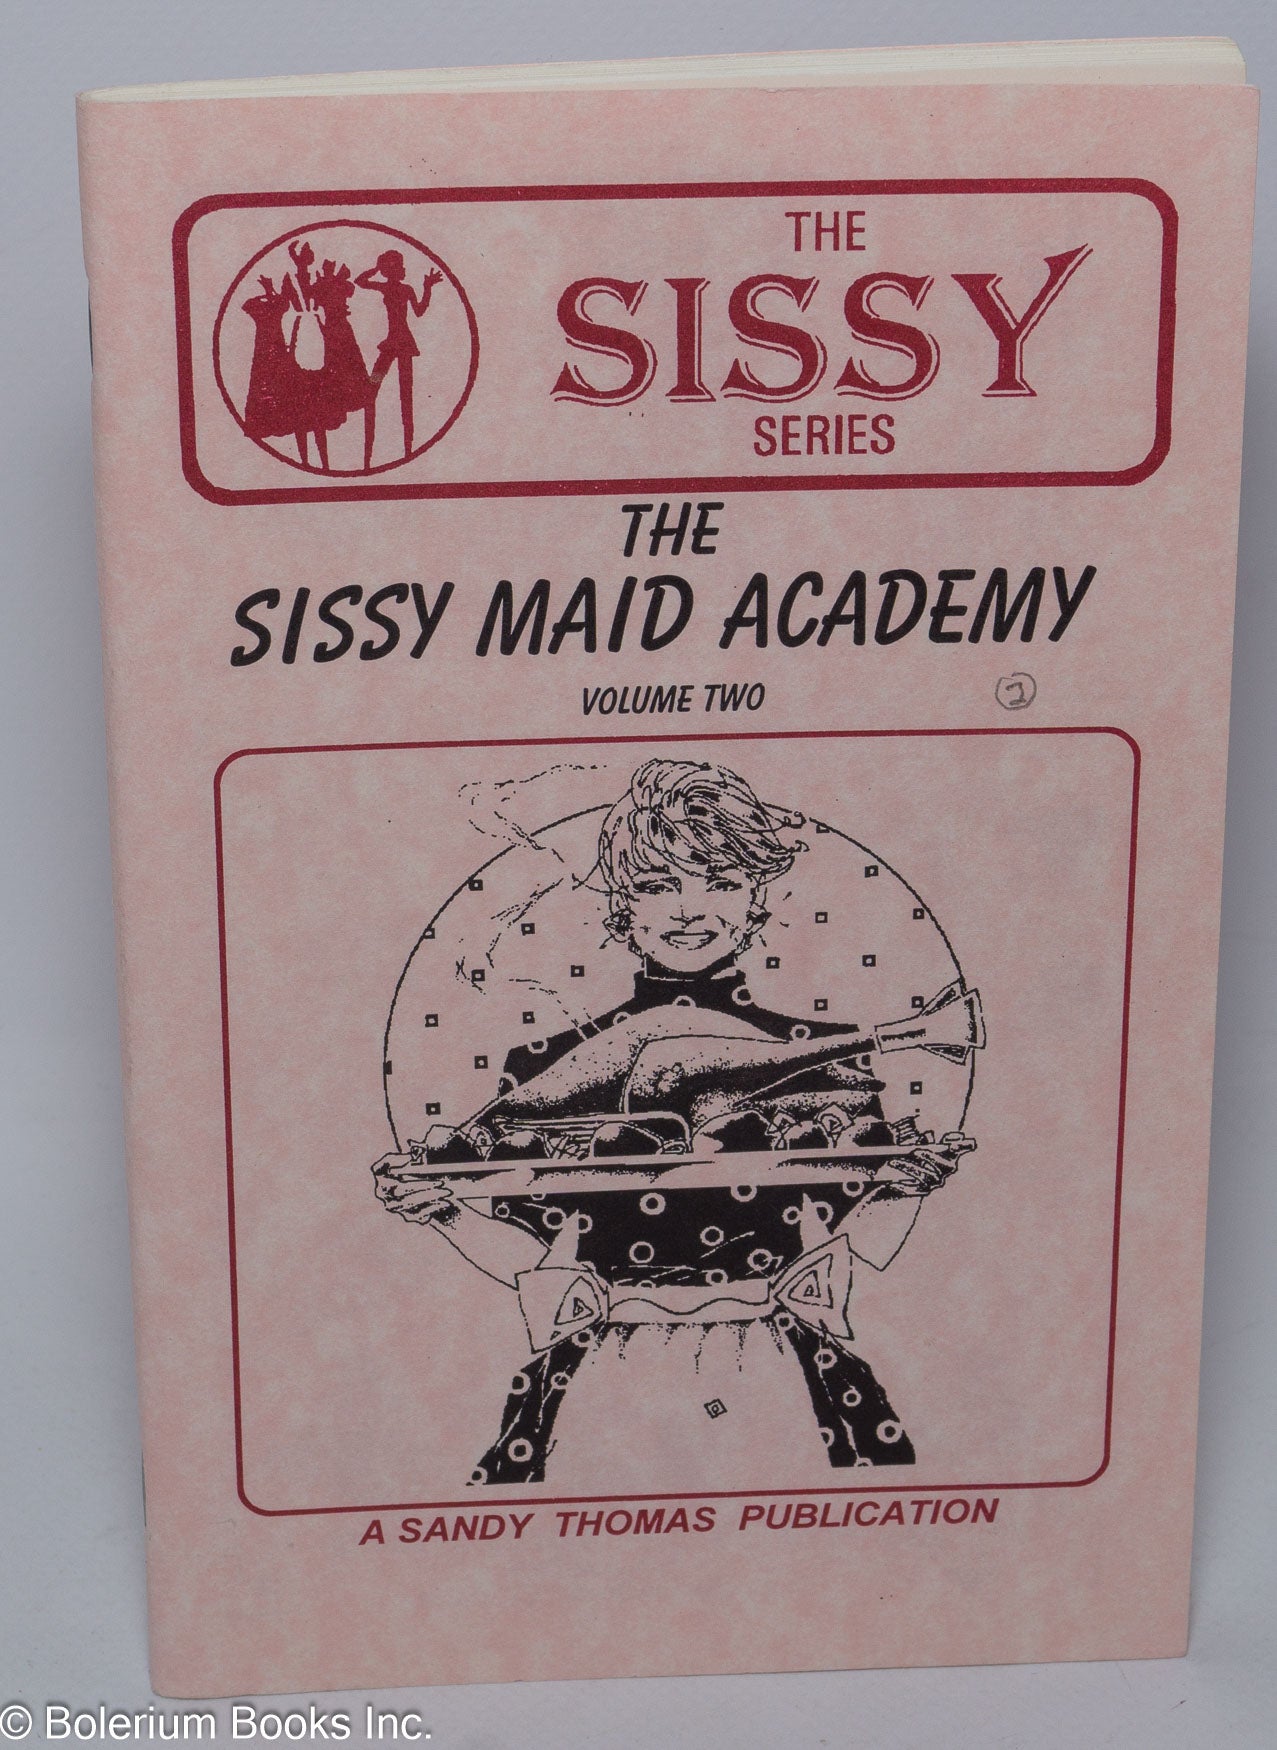 The Sissy Maid Academy: vol. 2 by Bobbie Ringgold on Bolerium Books